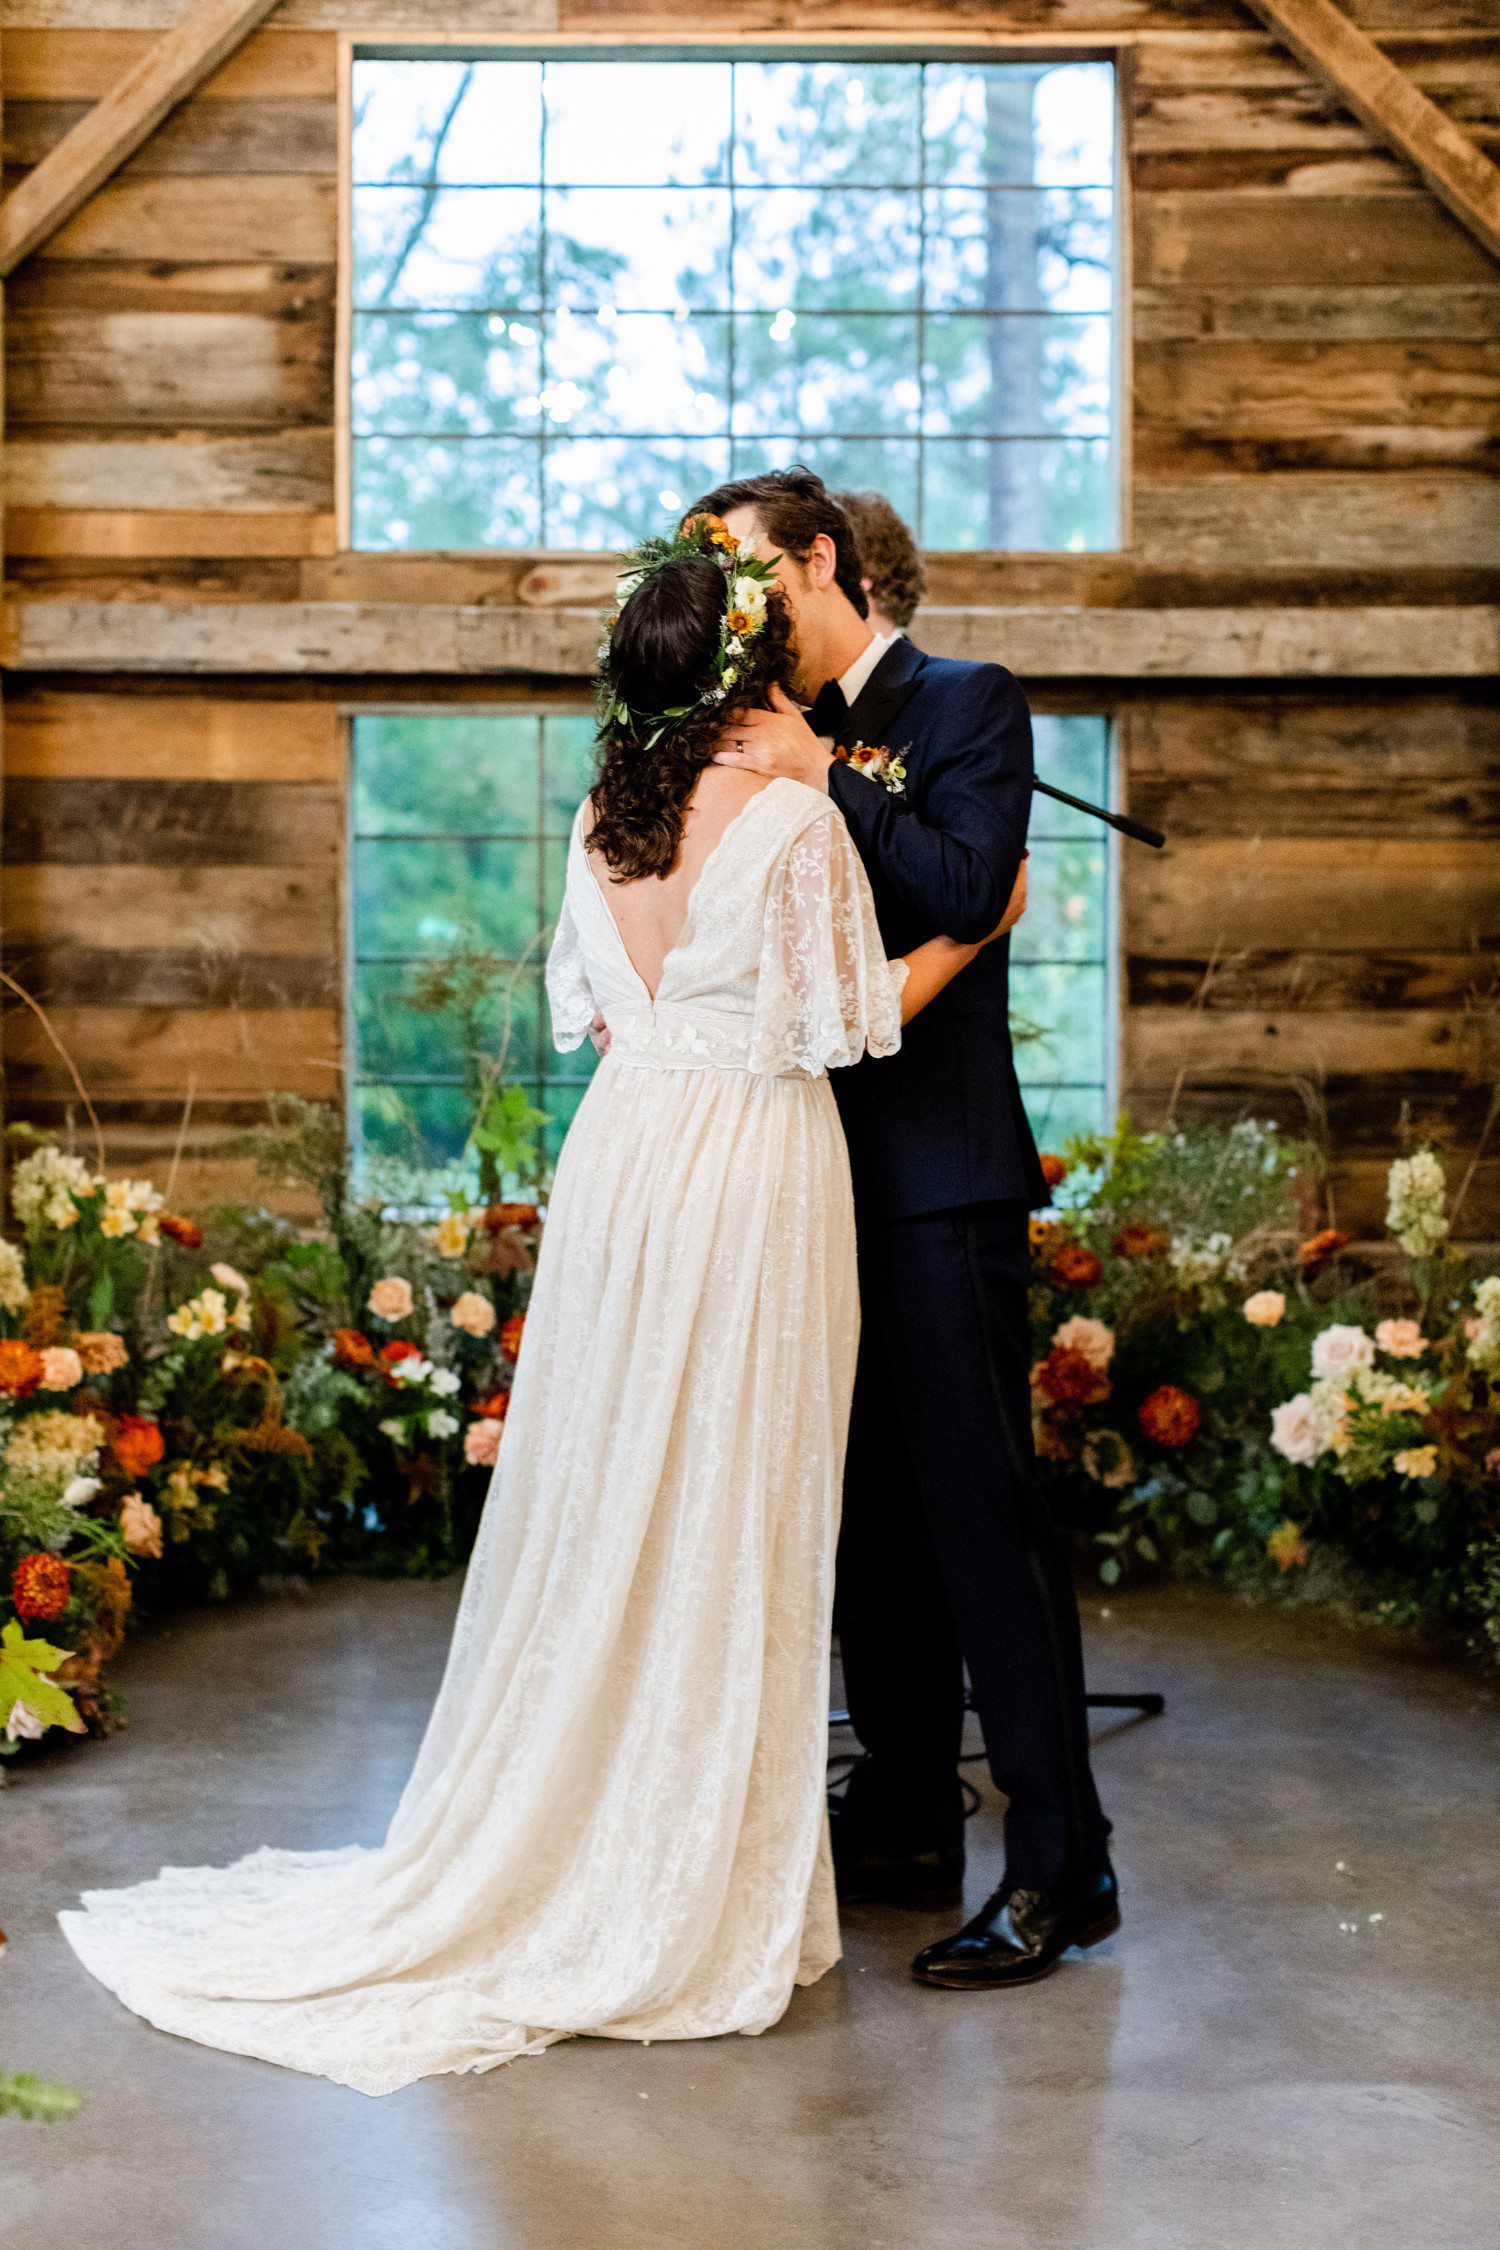 Wedding ceremony kiss